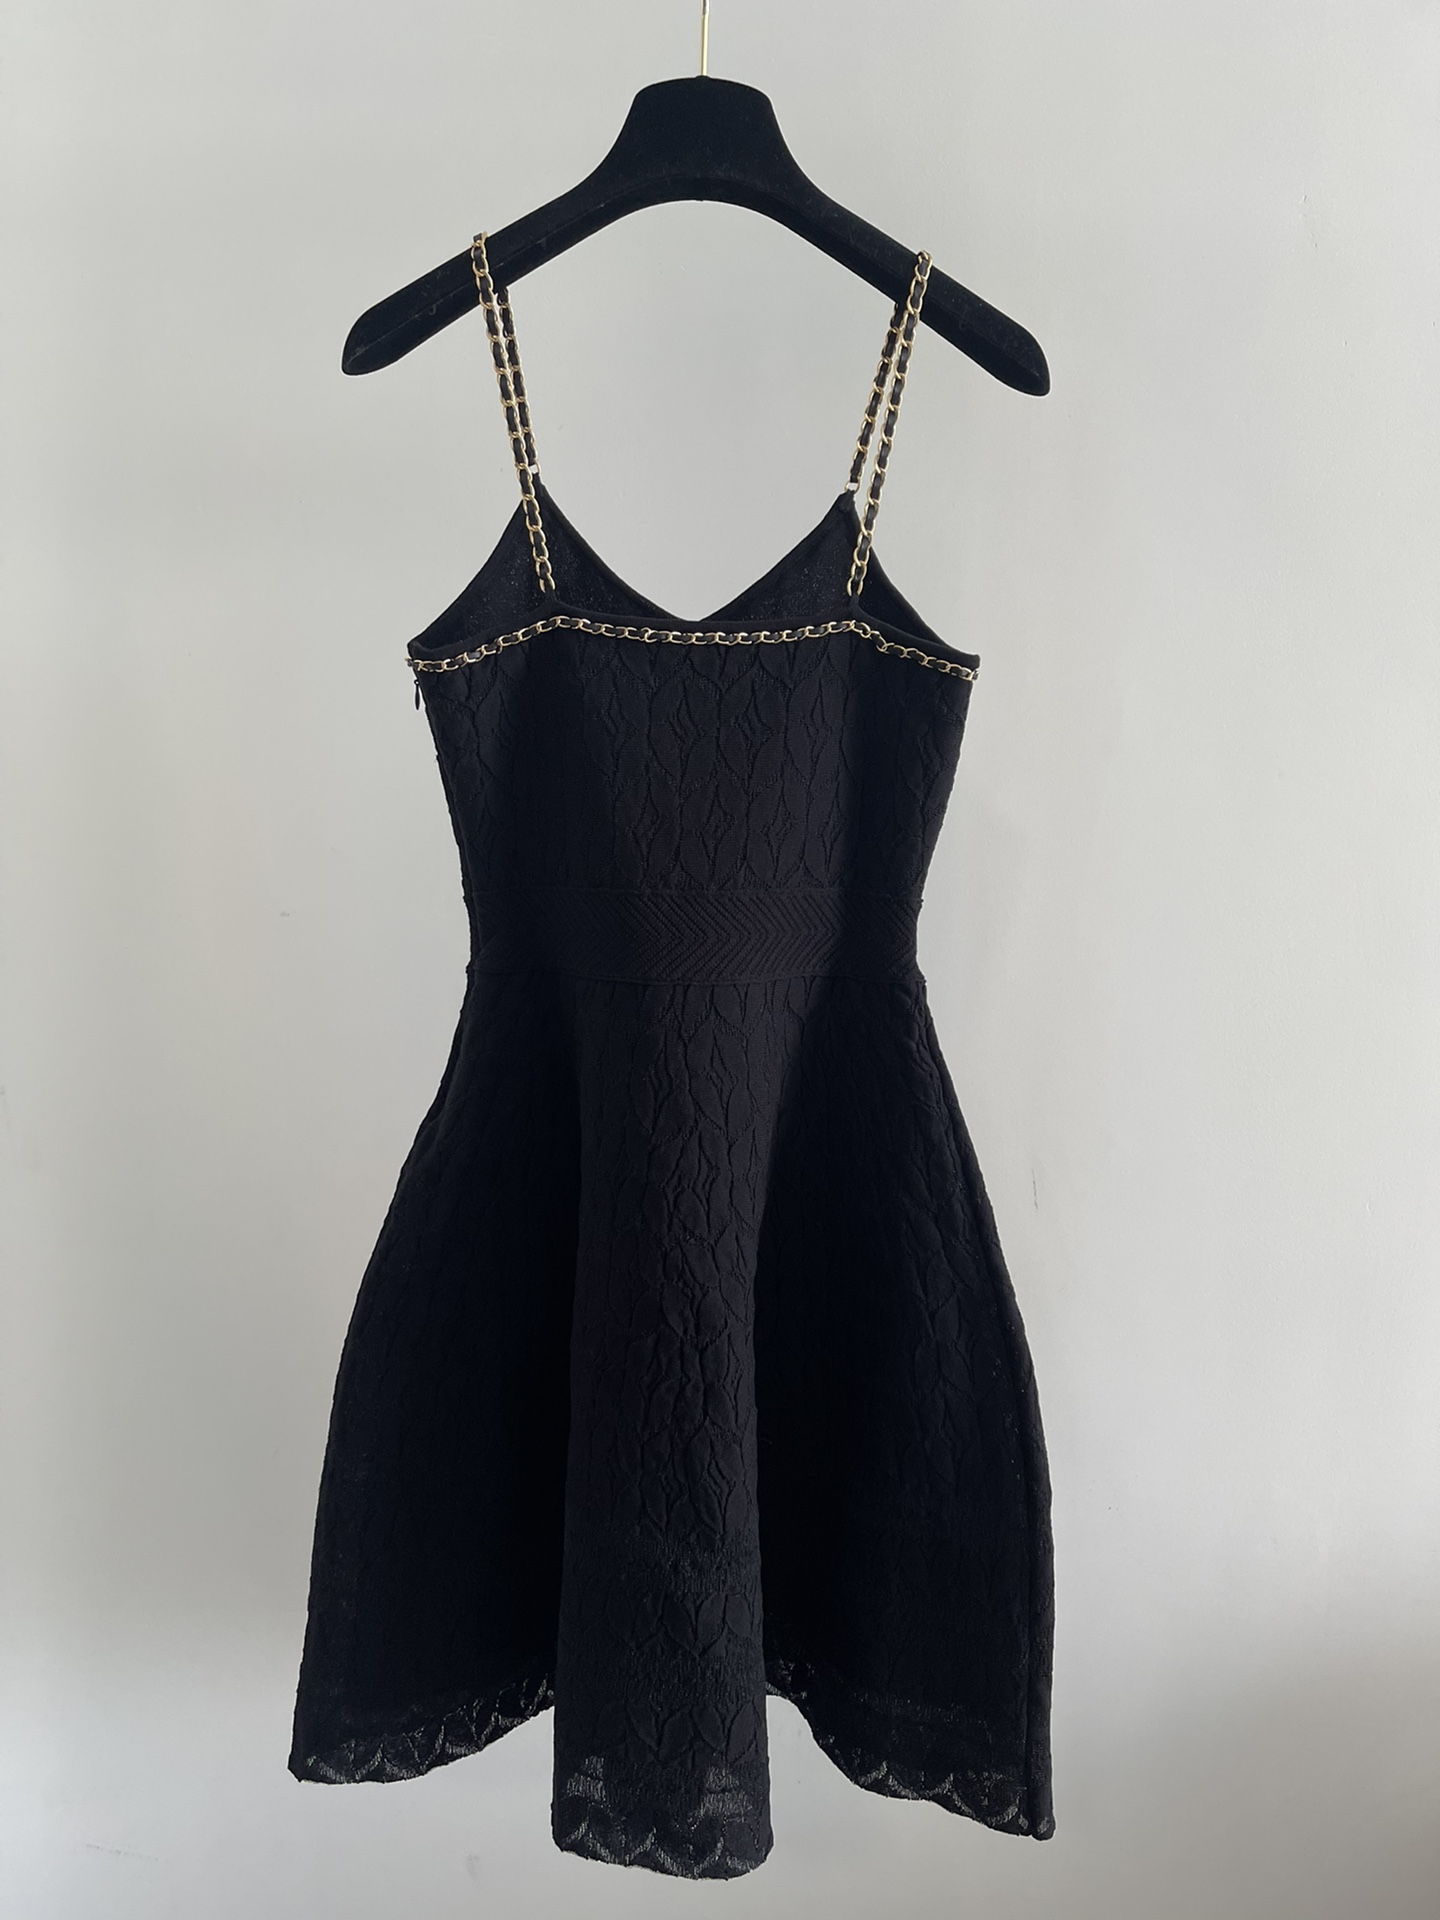 Dresses that ruled the 1920s 1Chanels Little Black Dress  by Smruti  Gupta  Medium